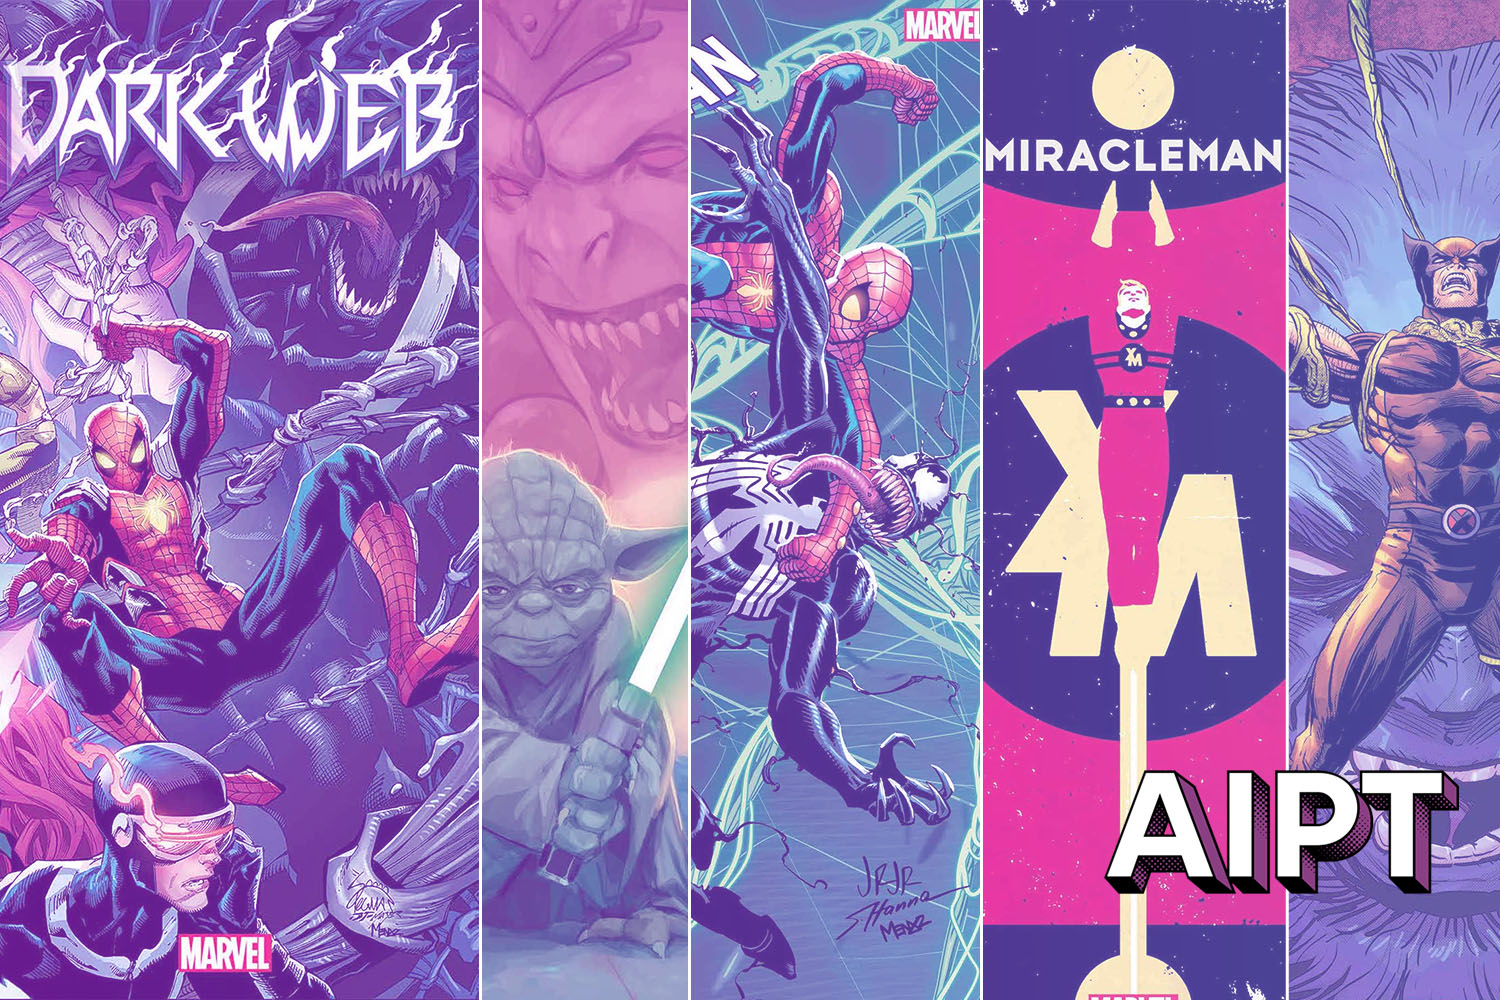 December 2022 Marvel Comics solicitations: New Dark Web, Miracleman, and more